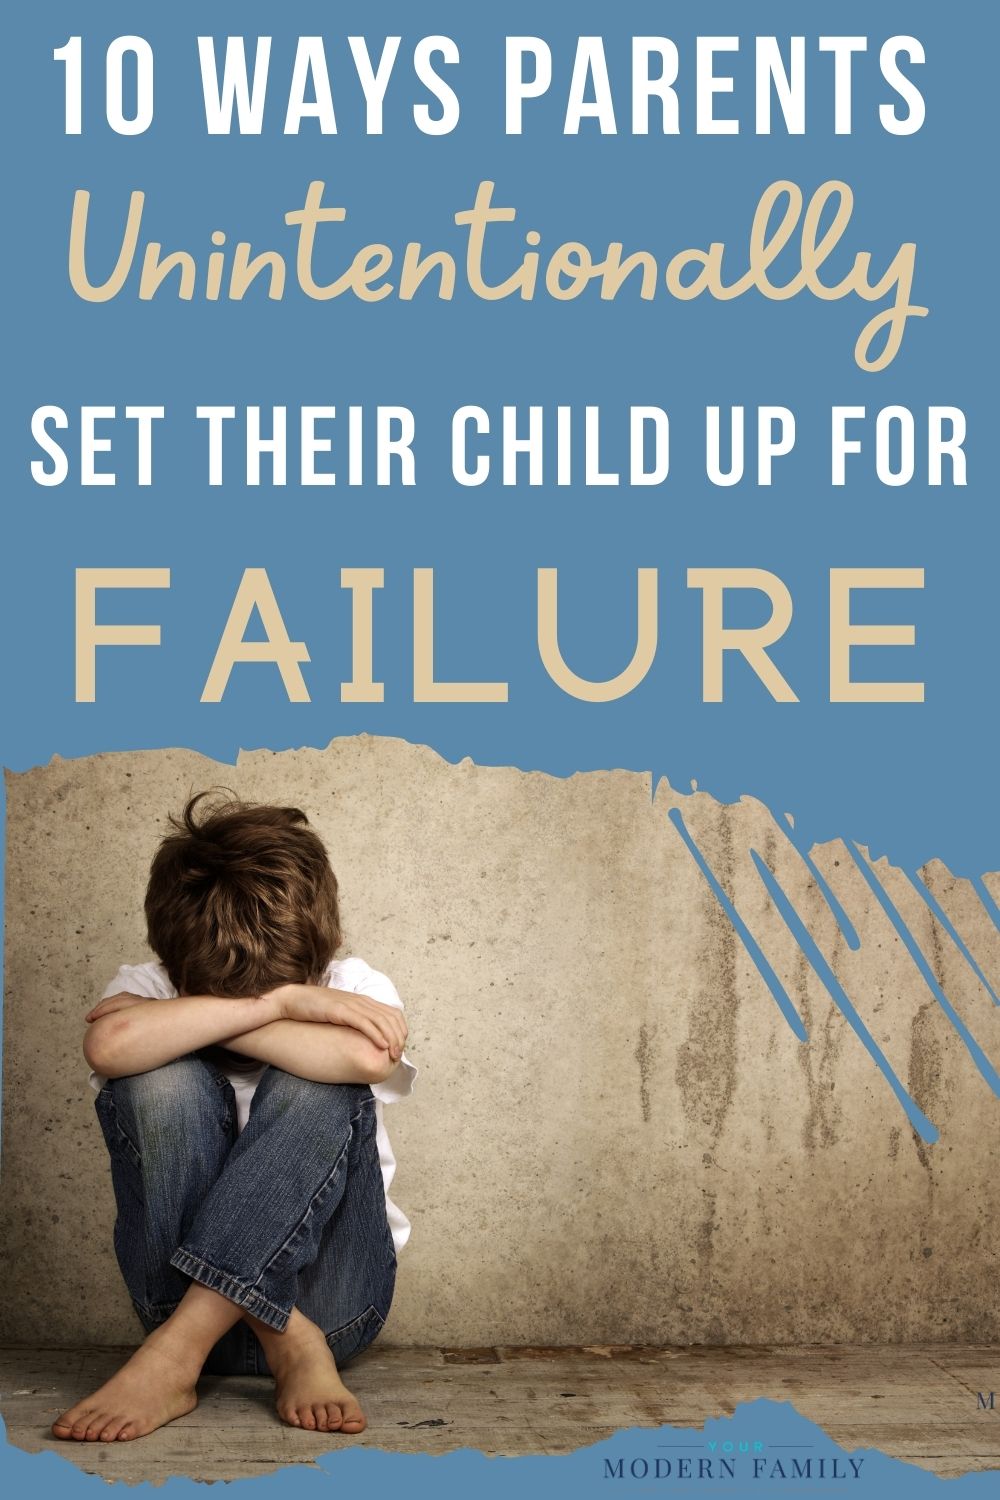 10 Ways Parents Set Their Children Up For Failure